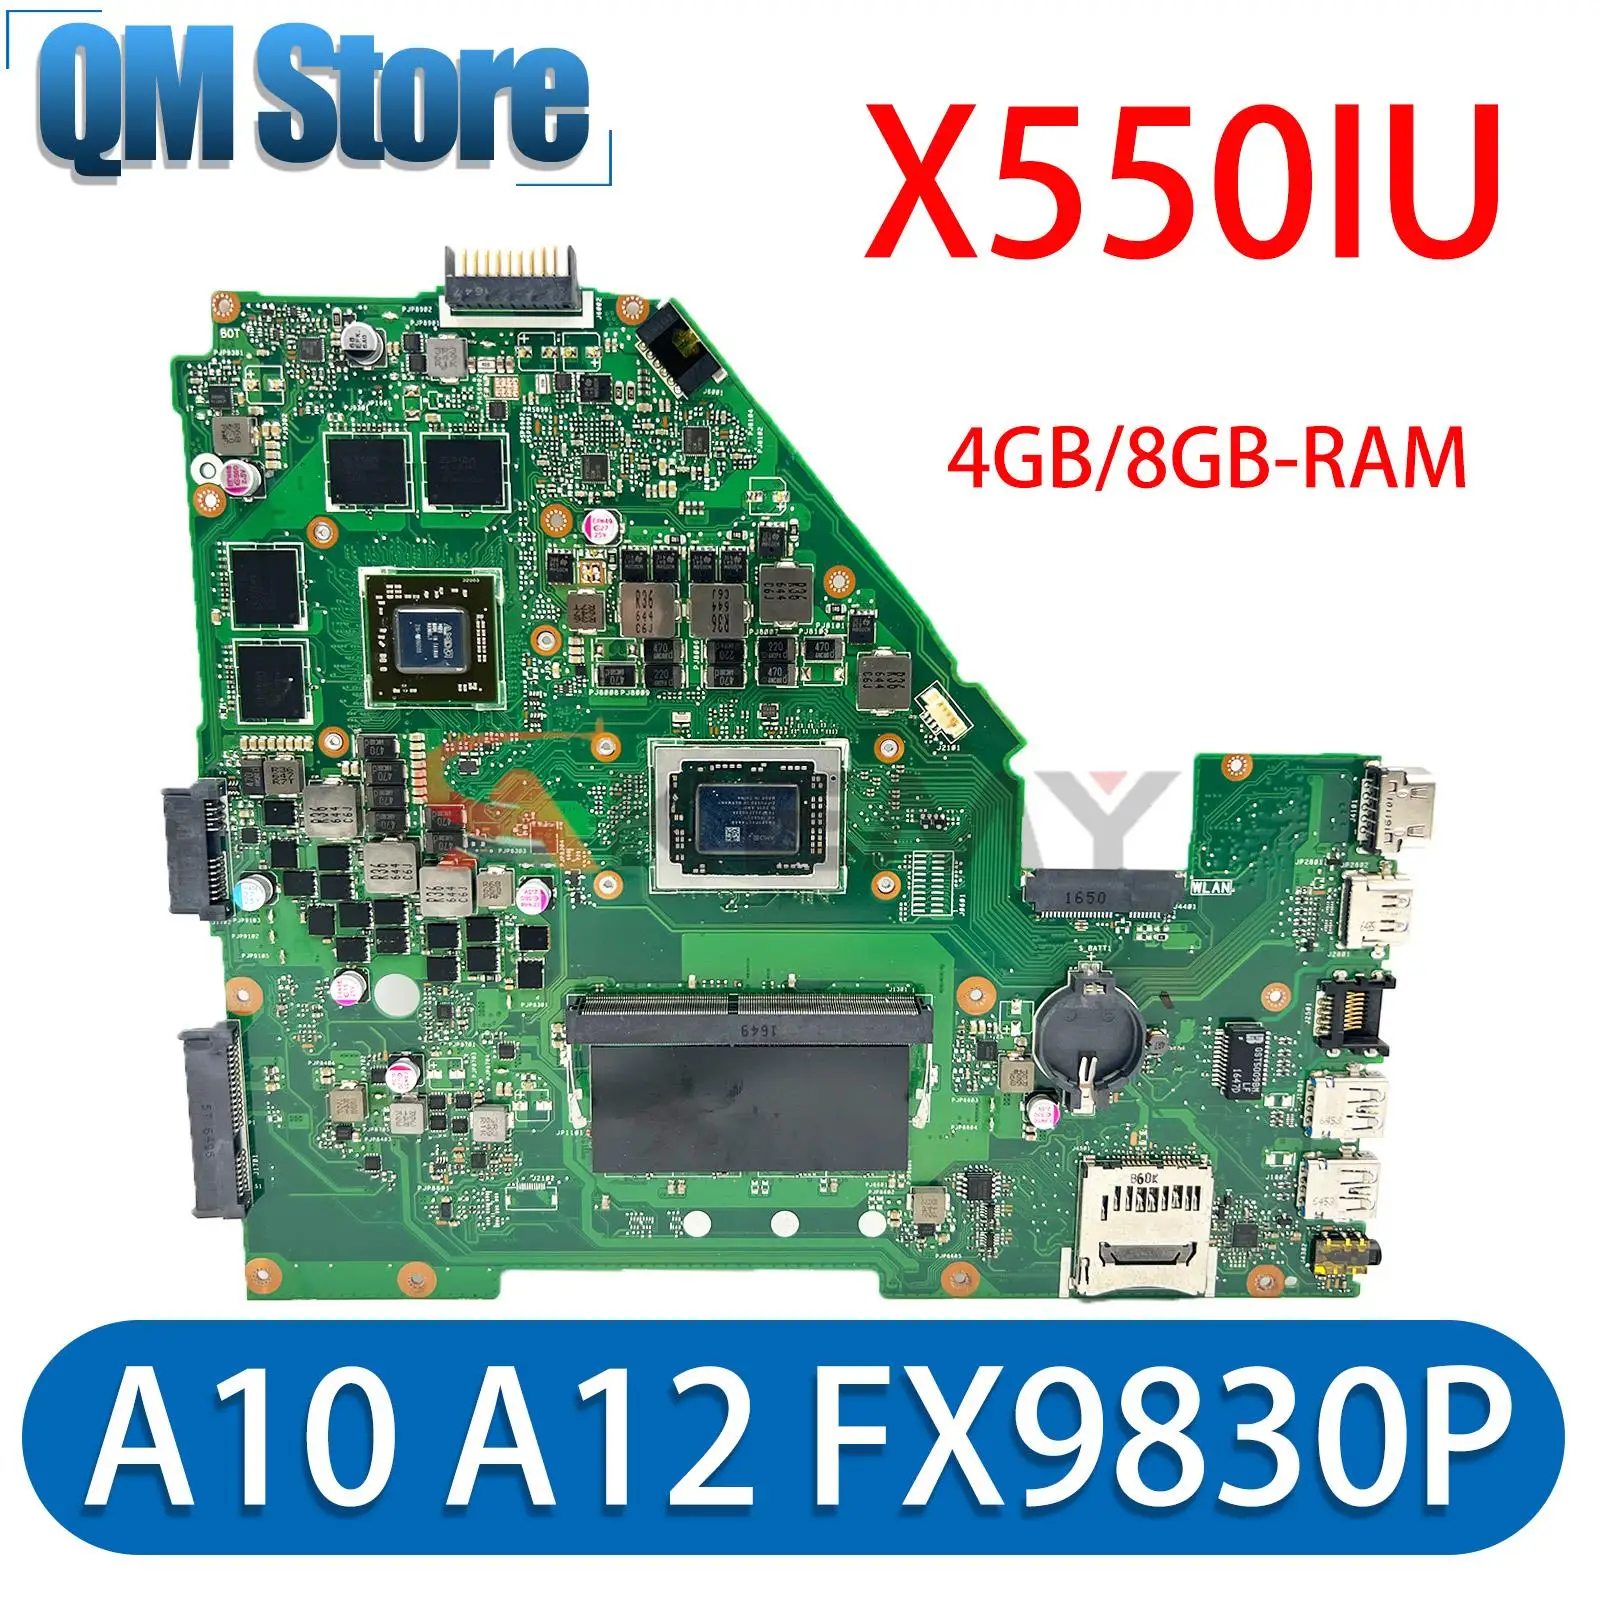 

Notebook X550IK Mainboard For ASUS X550I X550IU XV50I VX50IU VX50IK Laptop Motherboard A10 A12 FX-9830P CPU 4GB/8GB-RAM RX460